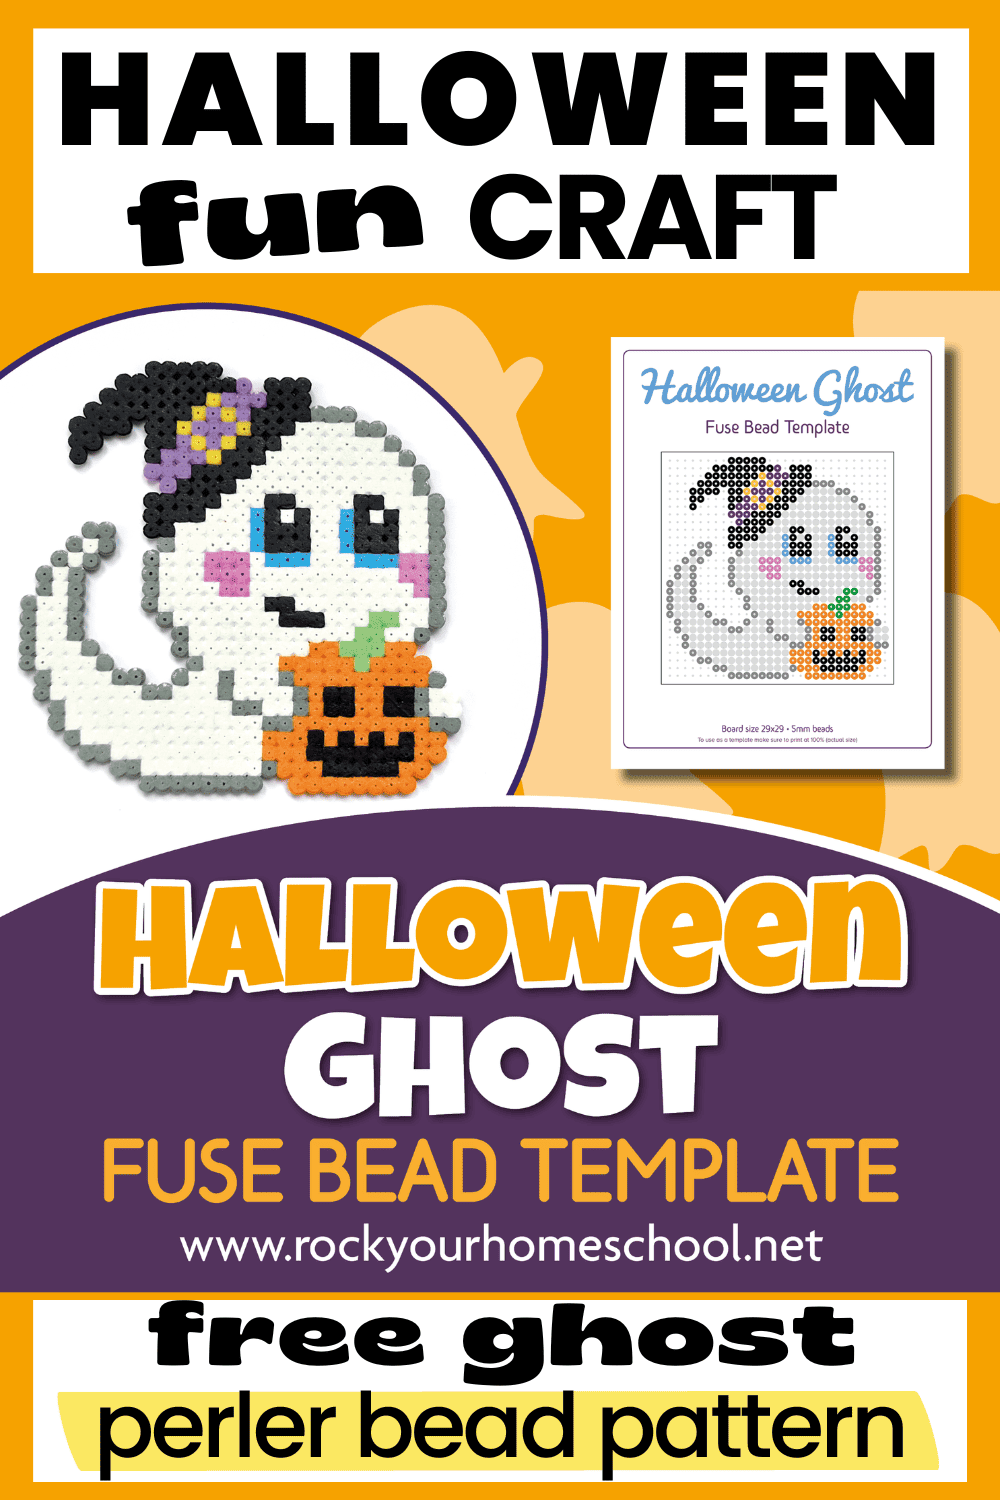 Ghost Perler Bead Pattern: How to Make & Enjoy this Halloween Craft (Free)